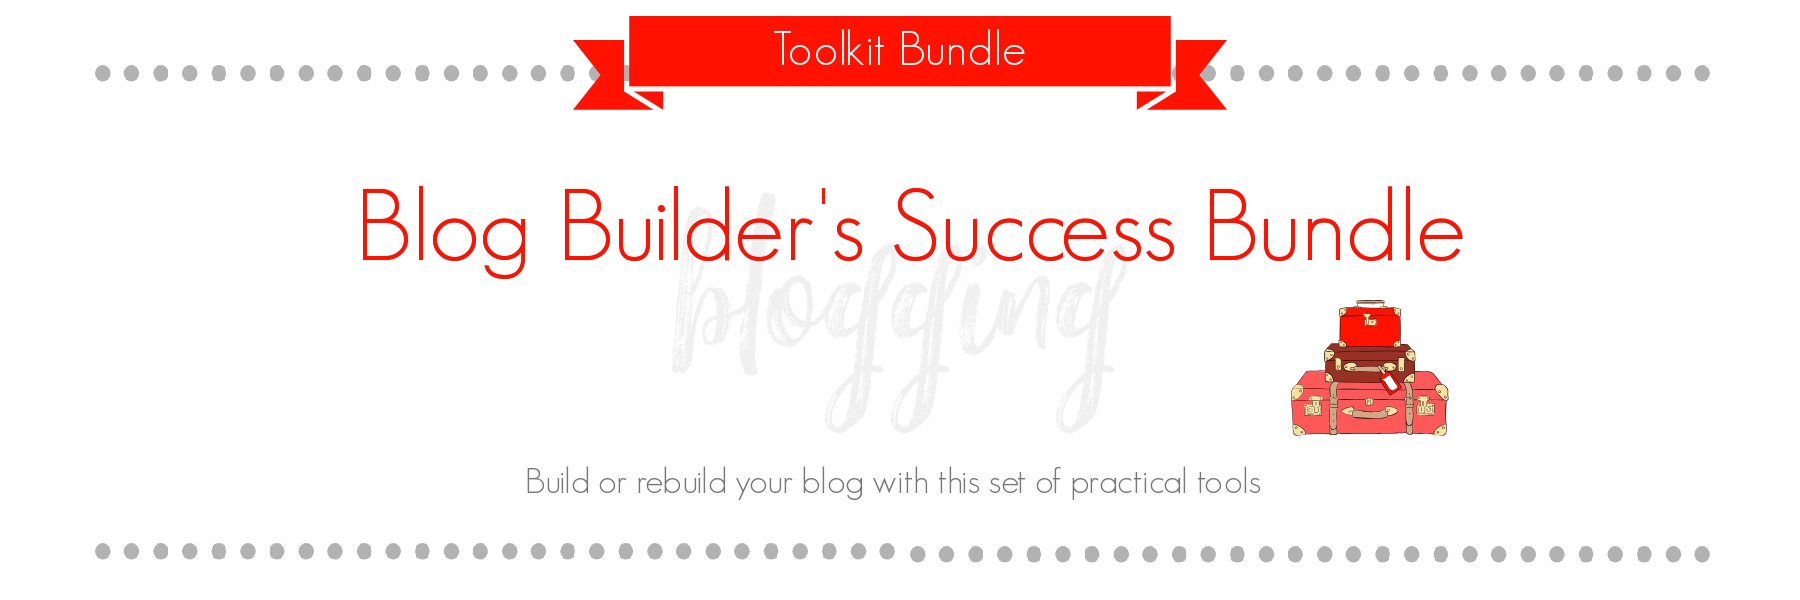 Blog Builders Success Kit